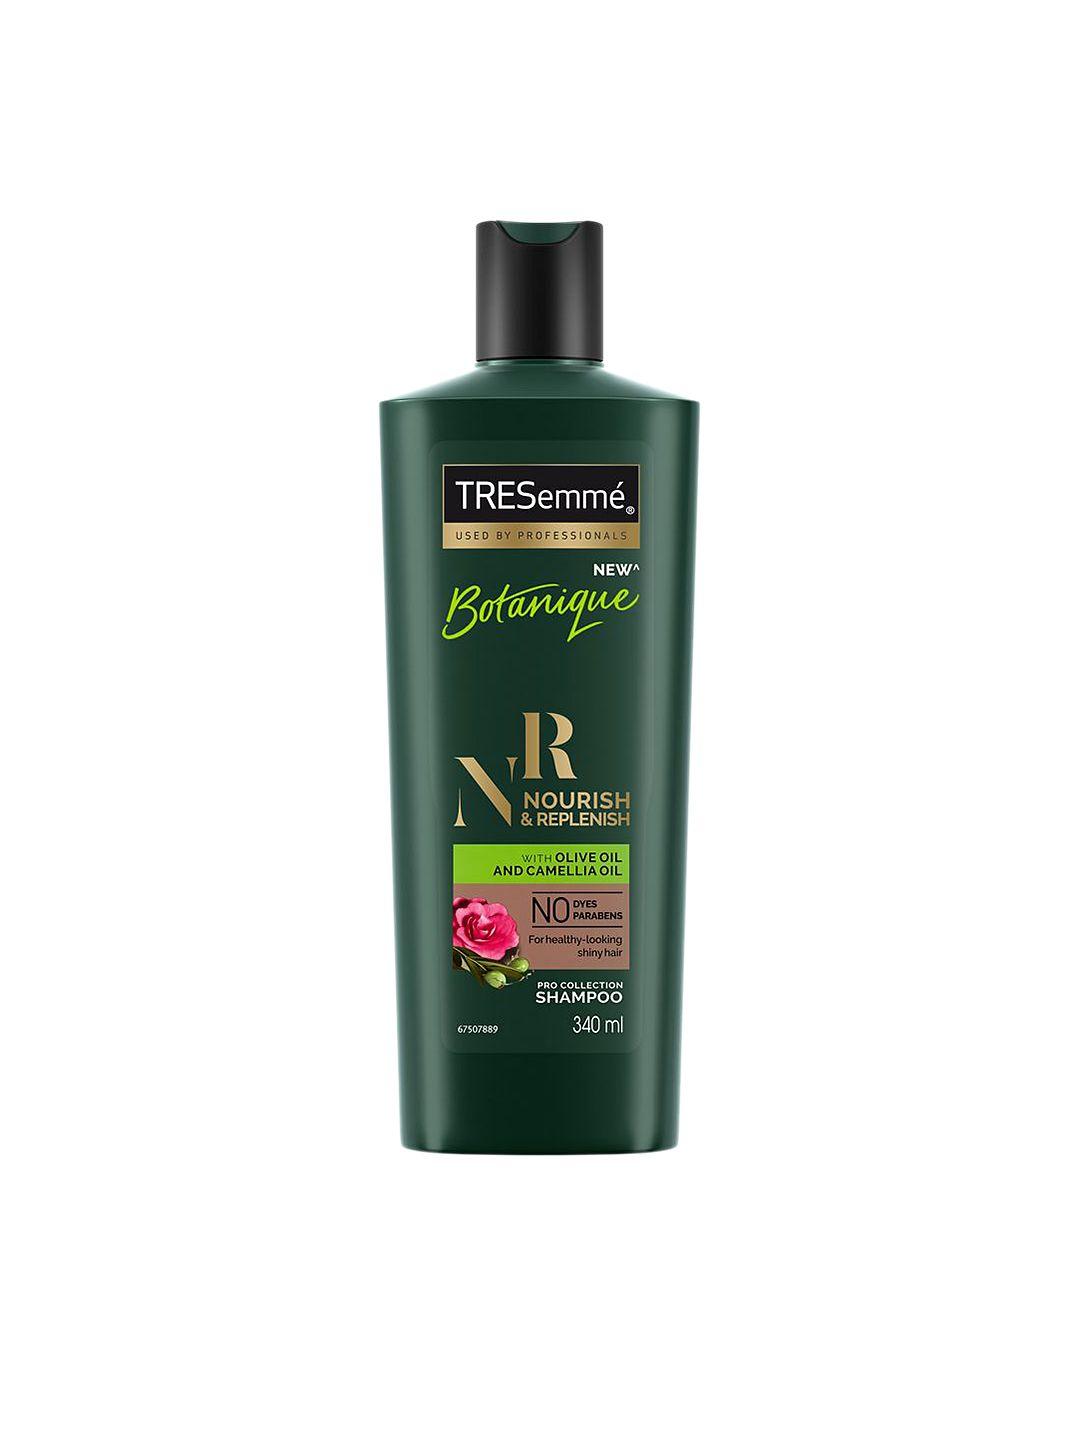 tresemme botanique nourish & replenish shampoo with olive & camellia oil - 340ml